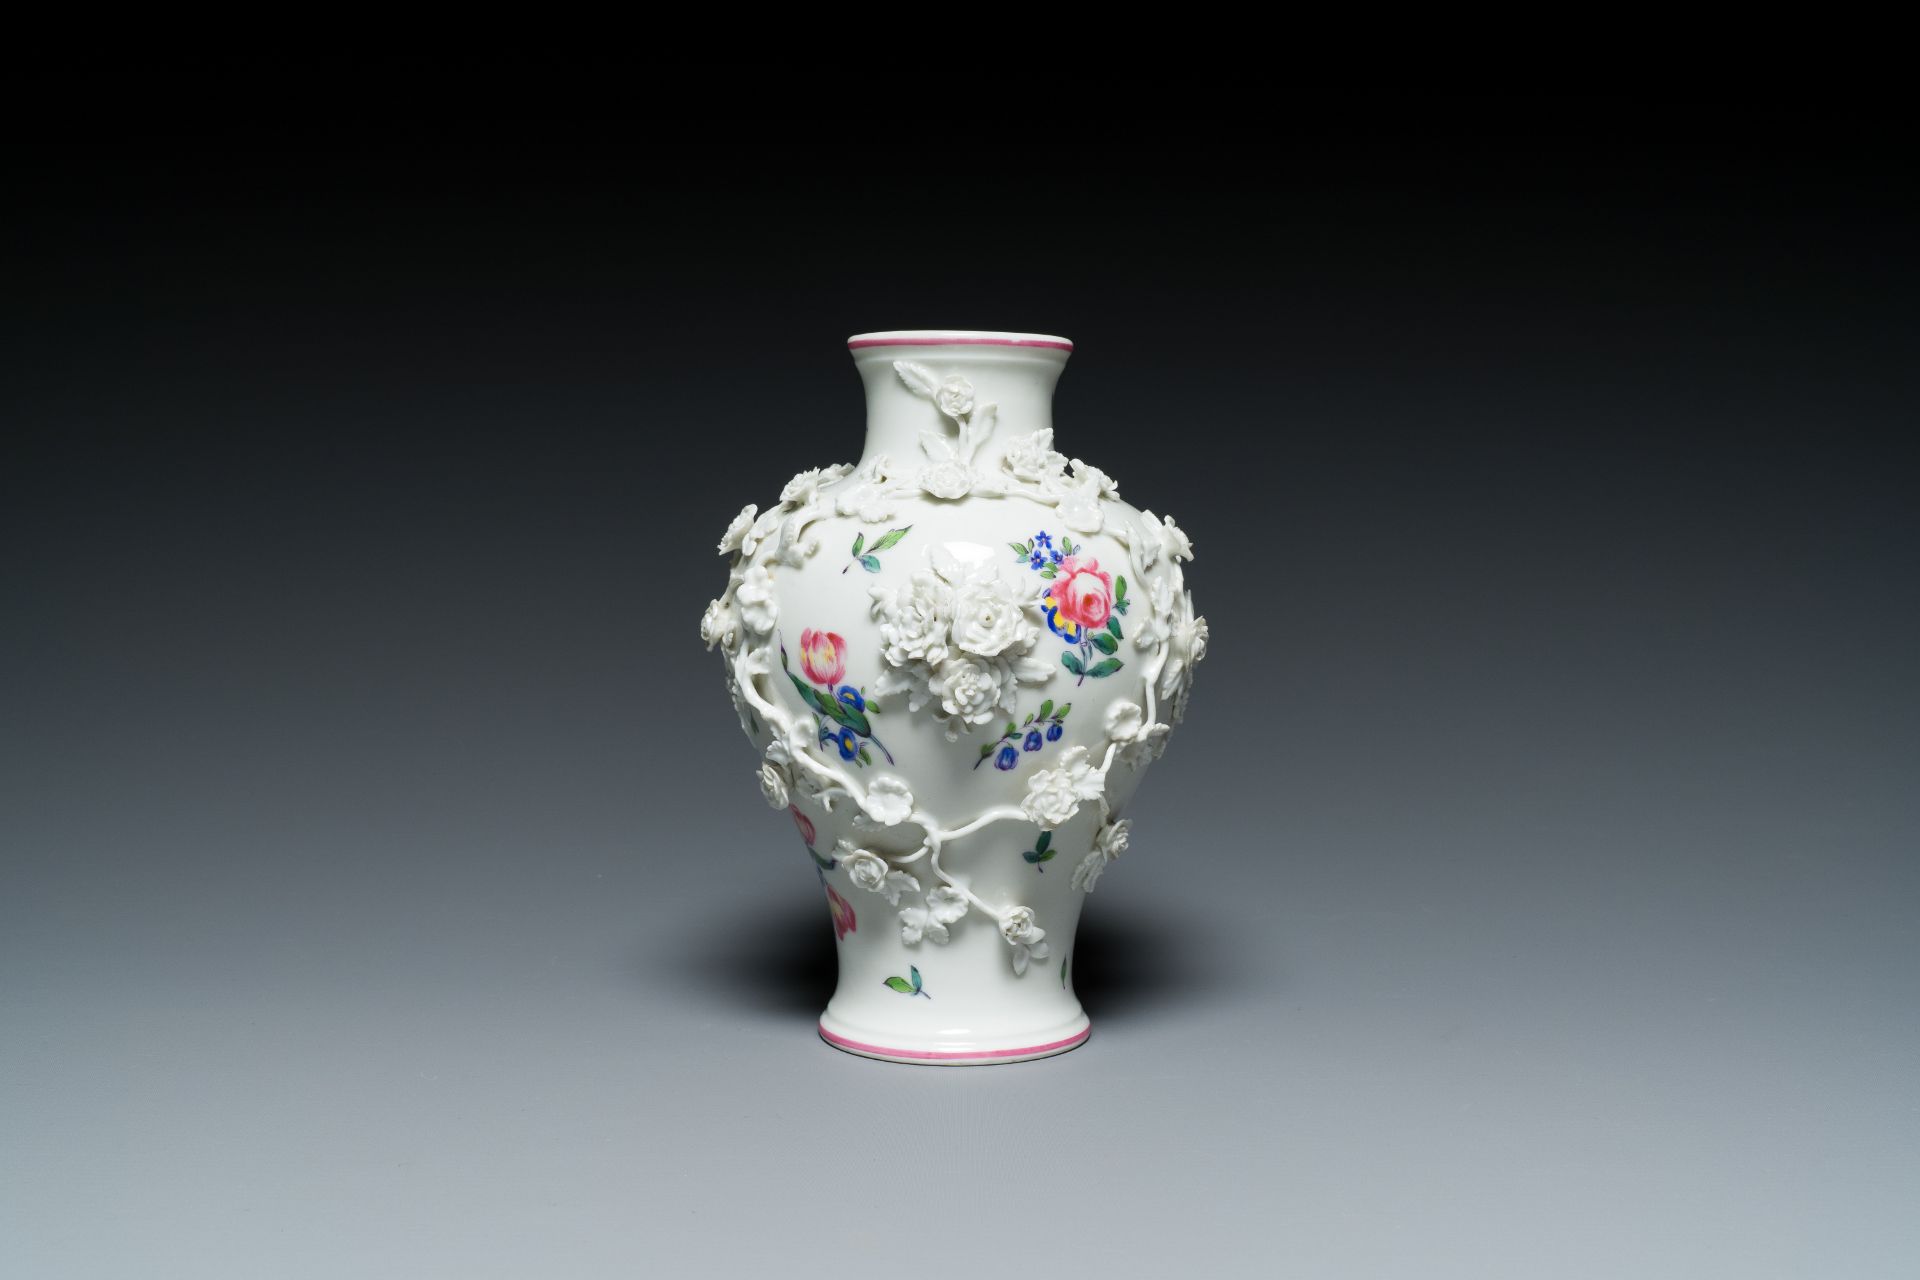 A Mennecy vase with applied floral design, France, DV mark, 18th C. - Image 6 of 16